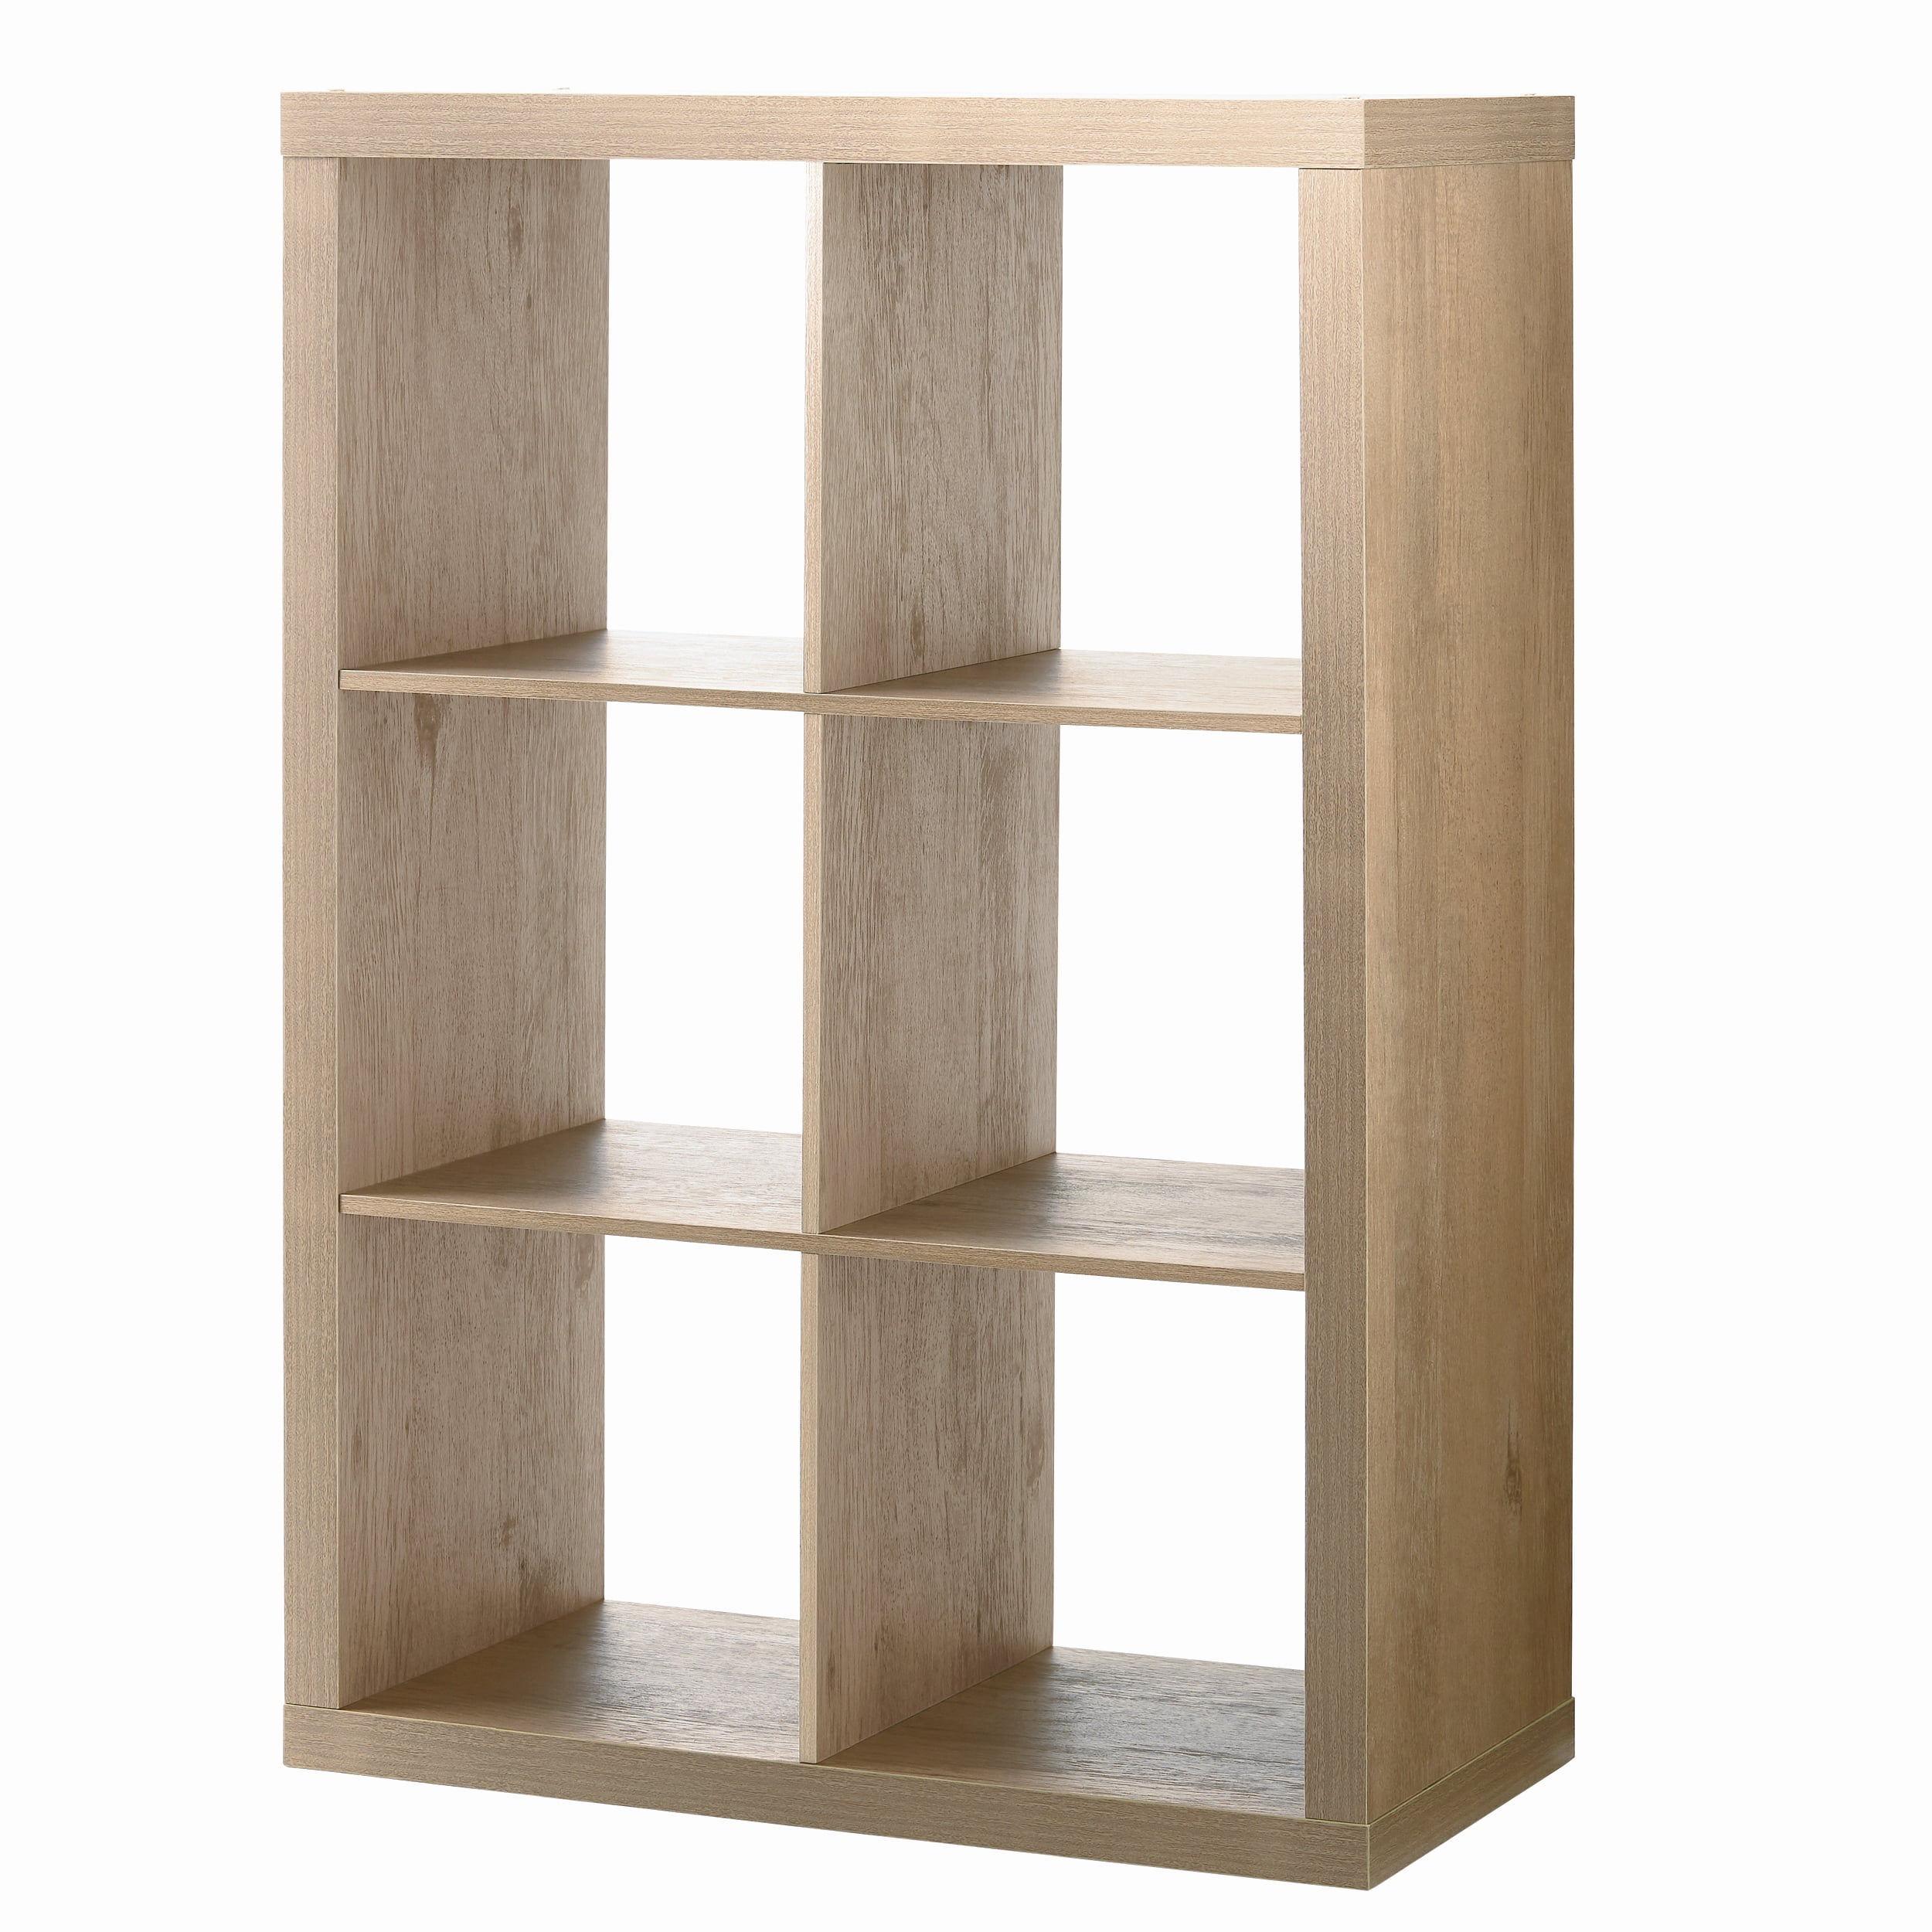 Square 4 Cube Organizer Wood Bookcase Open Storage Home Office Decor Natural USA 